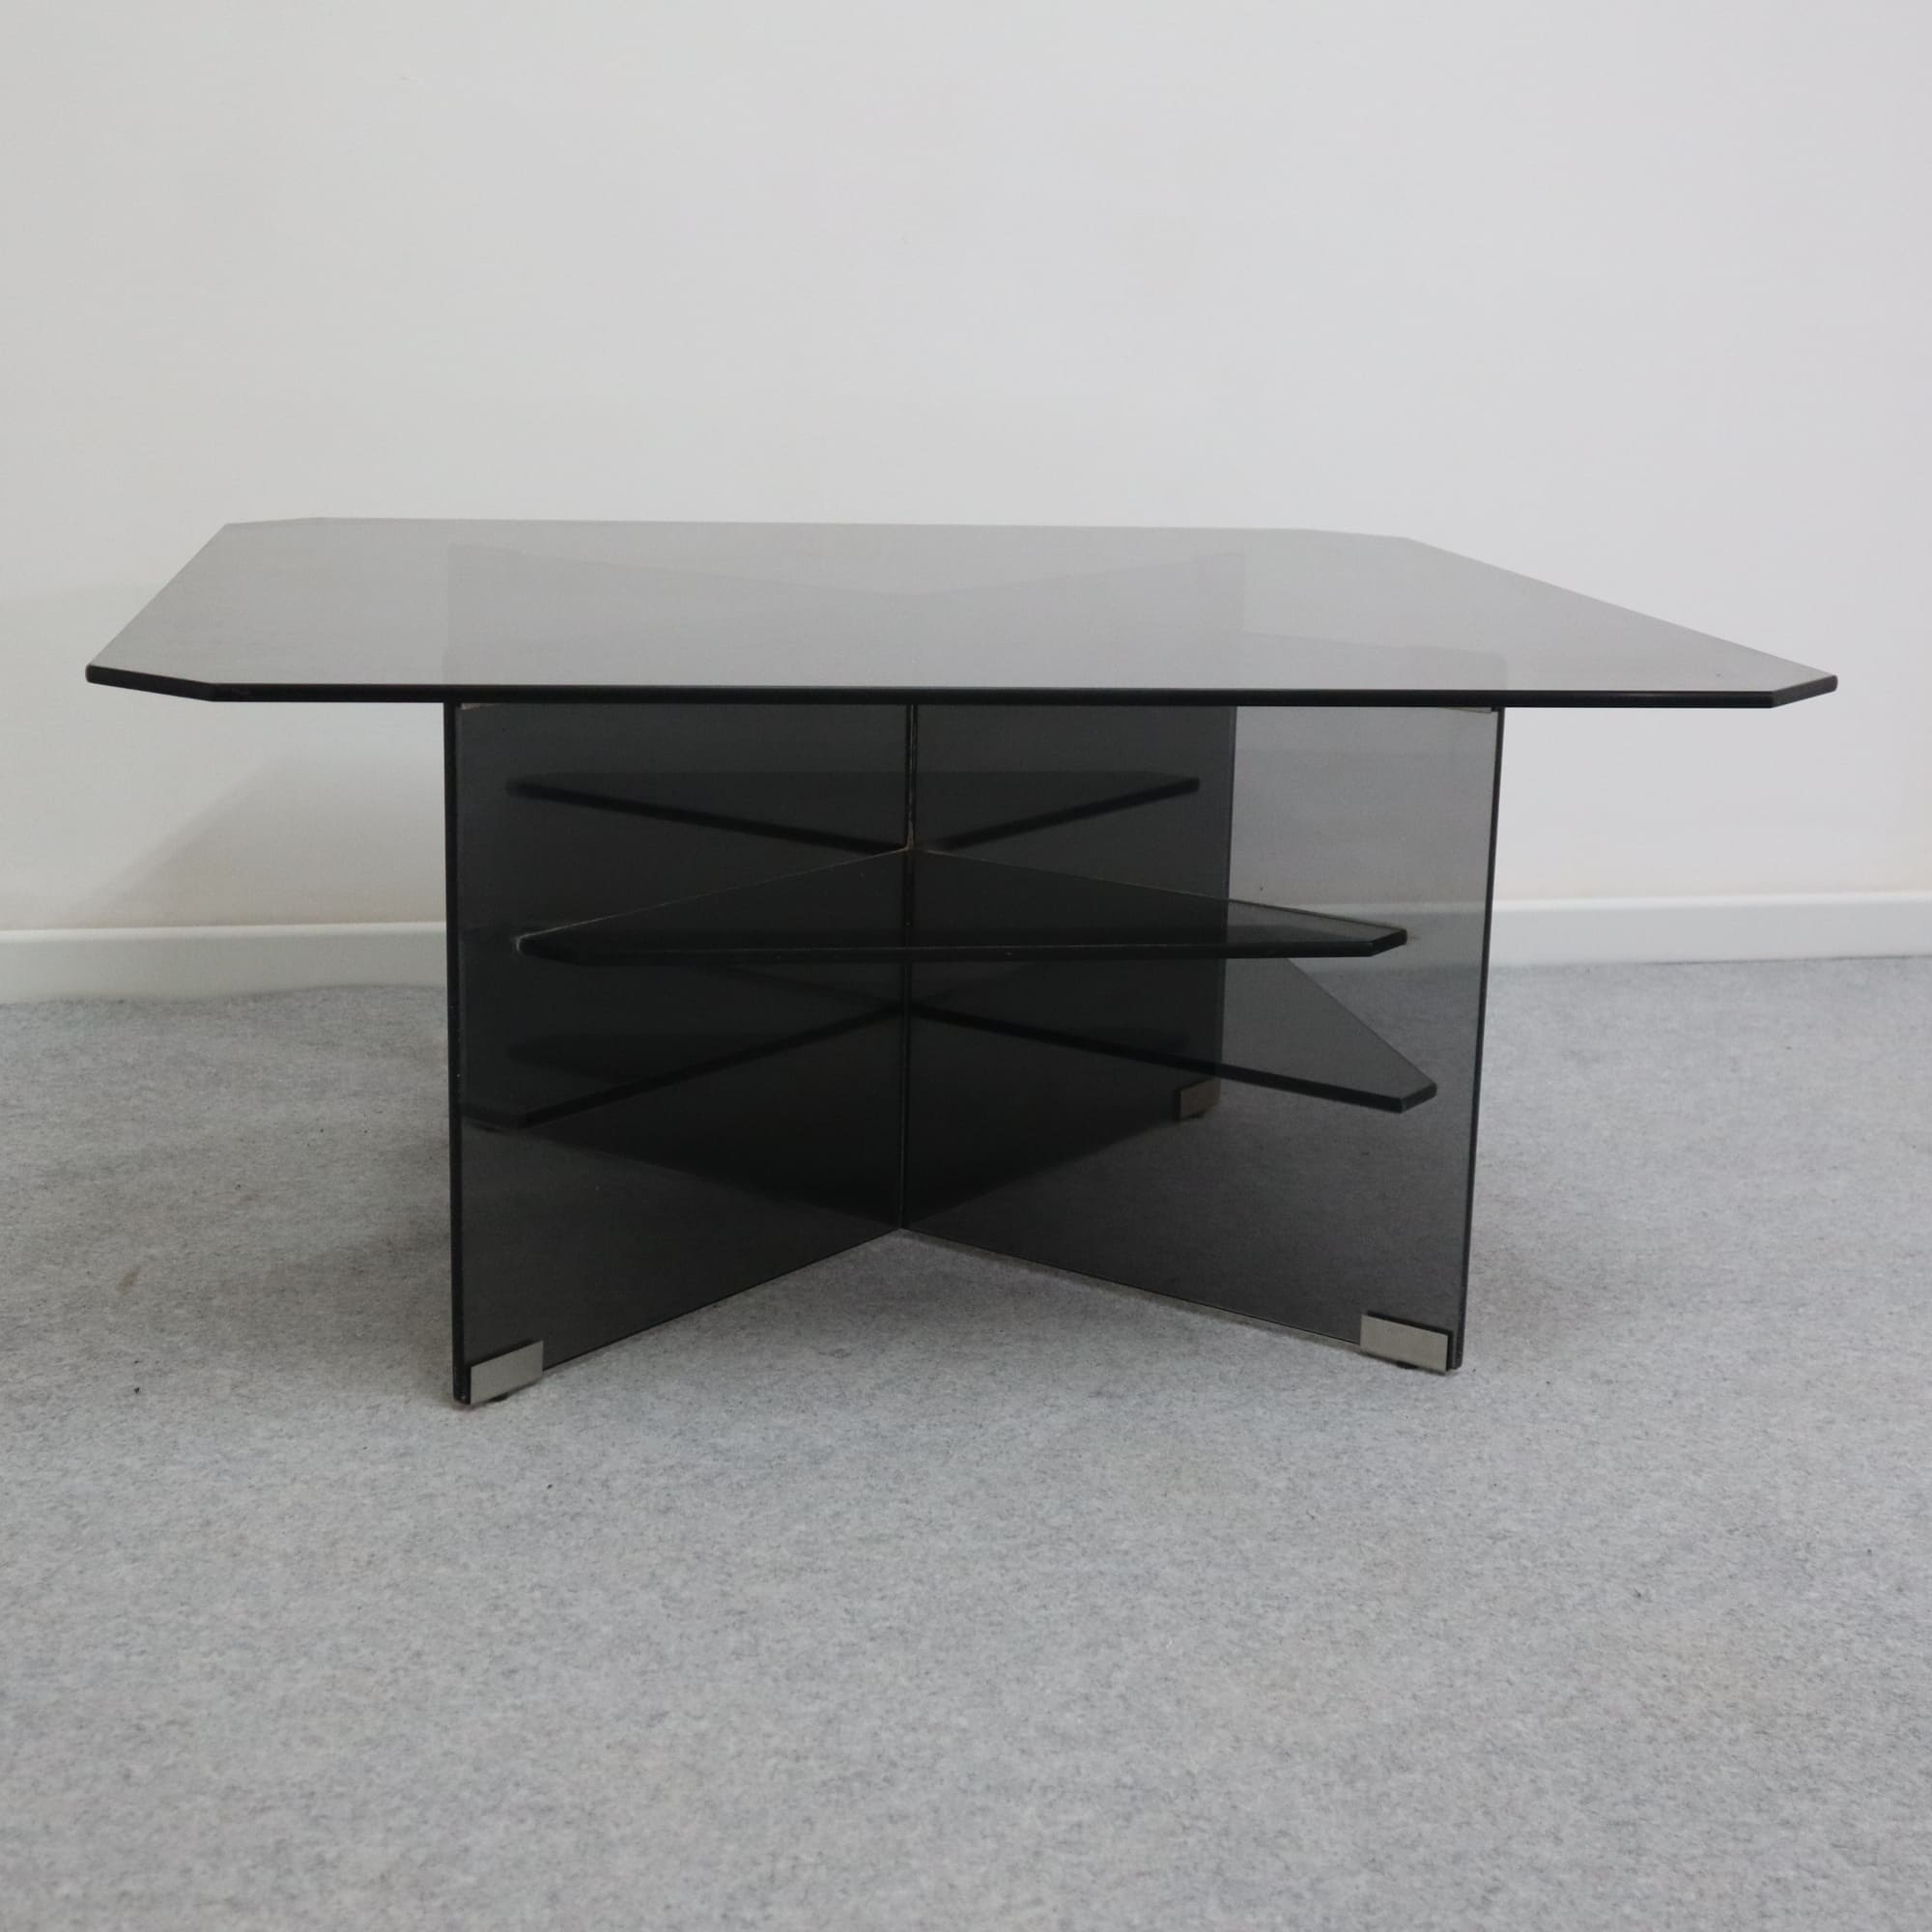 visionidepoca-visioni-depoca-smoked-glass-coffee table-70s-gallotti-radice-furniture-design-vintage-made-italy-1